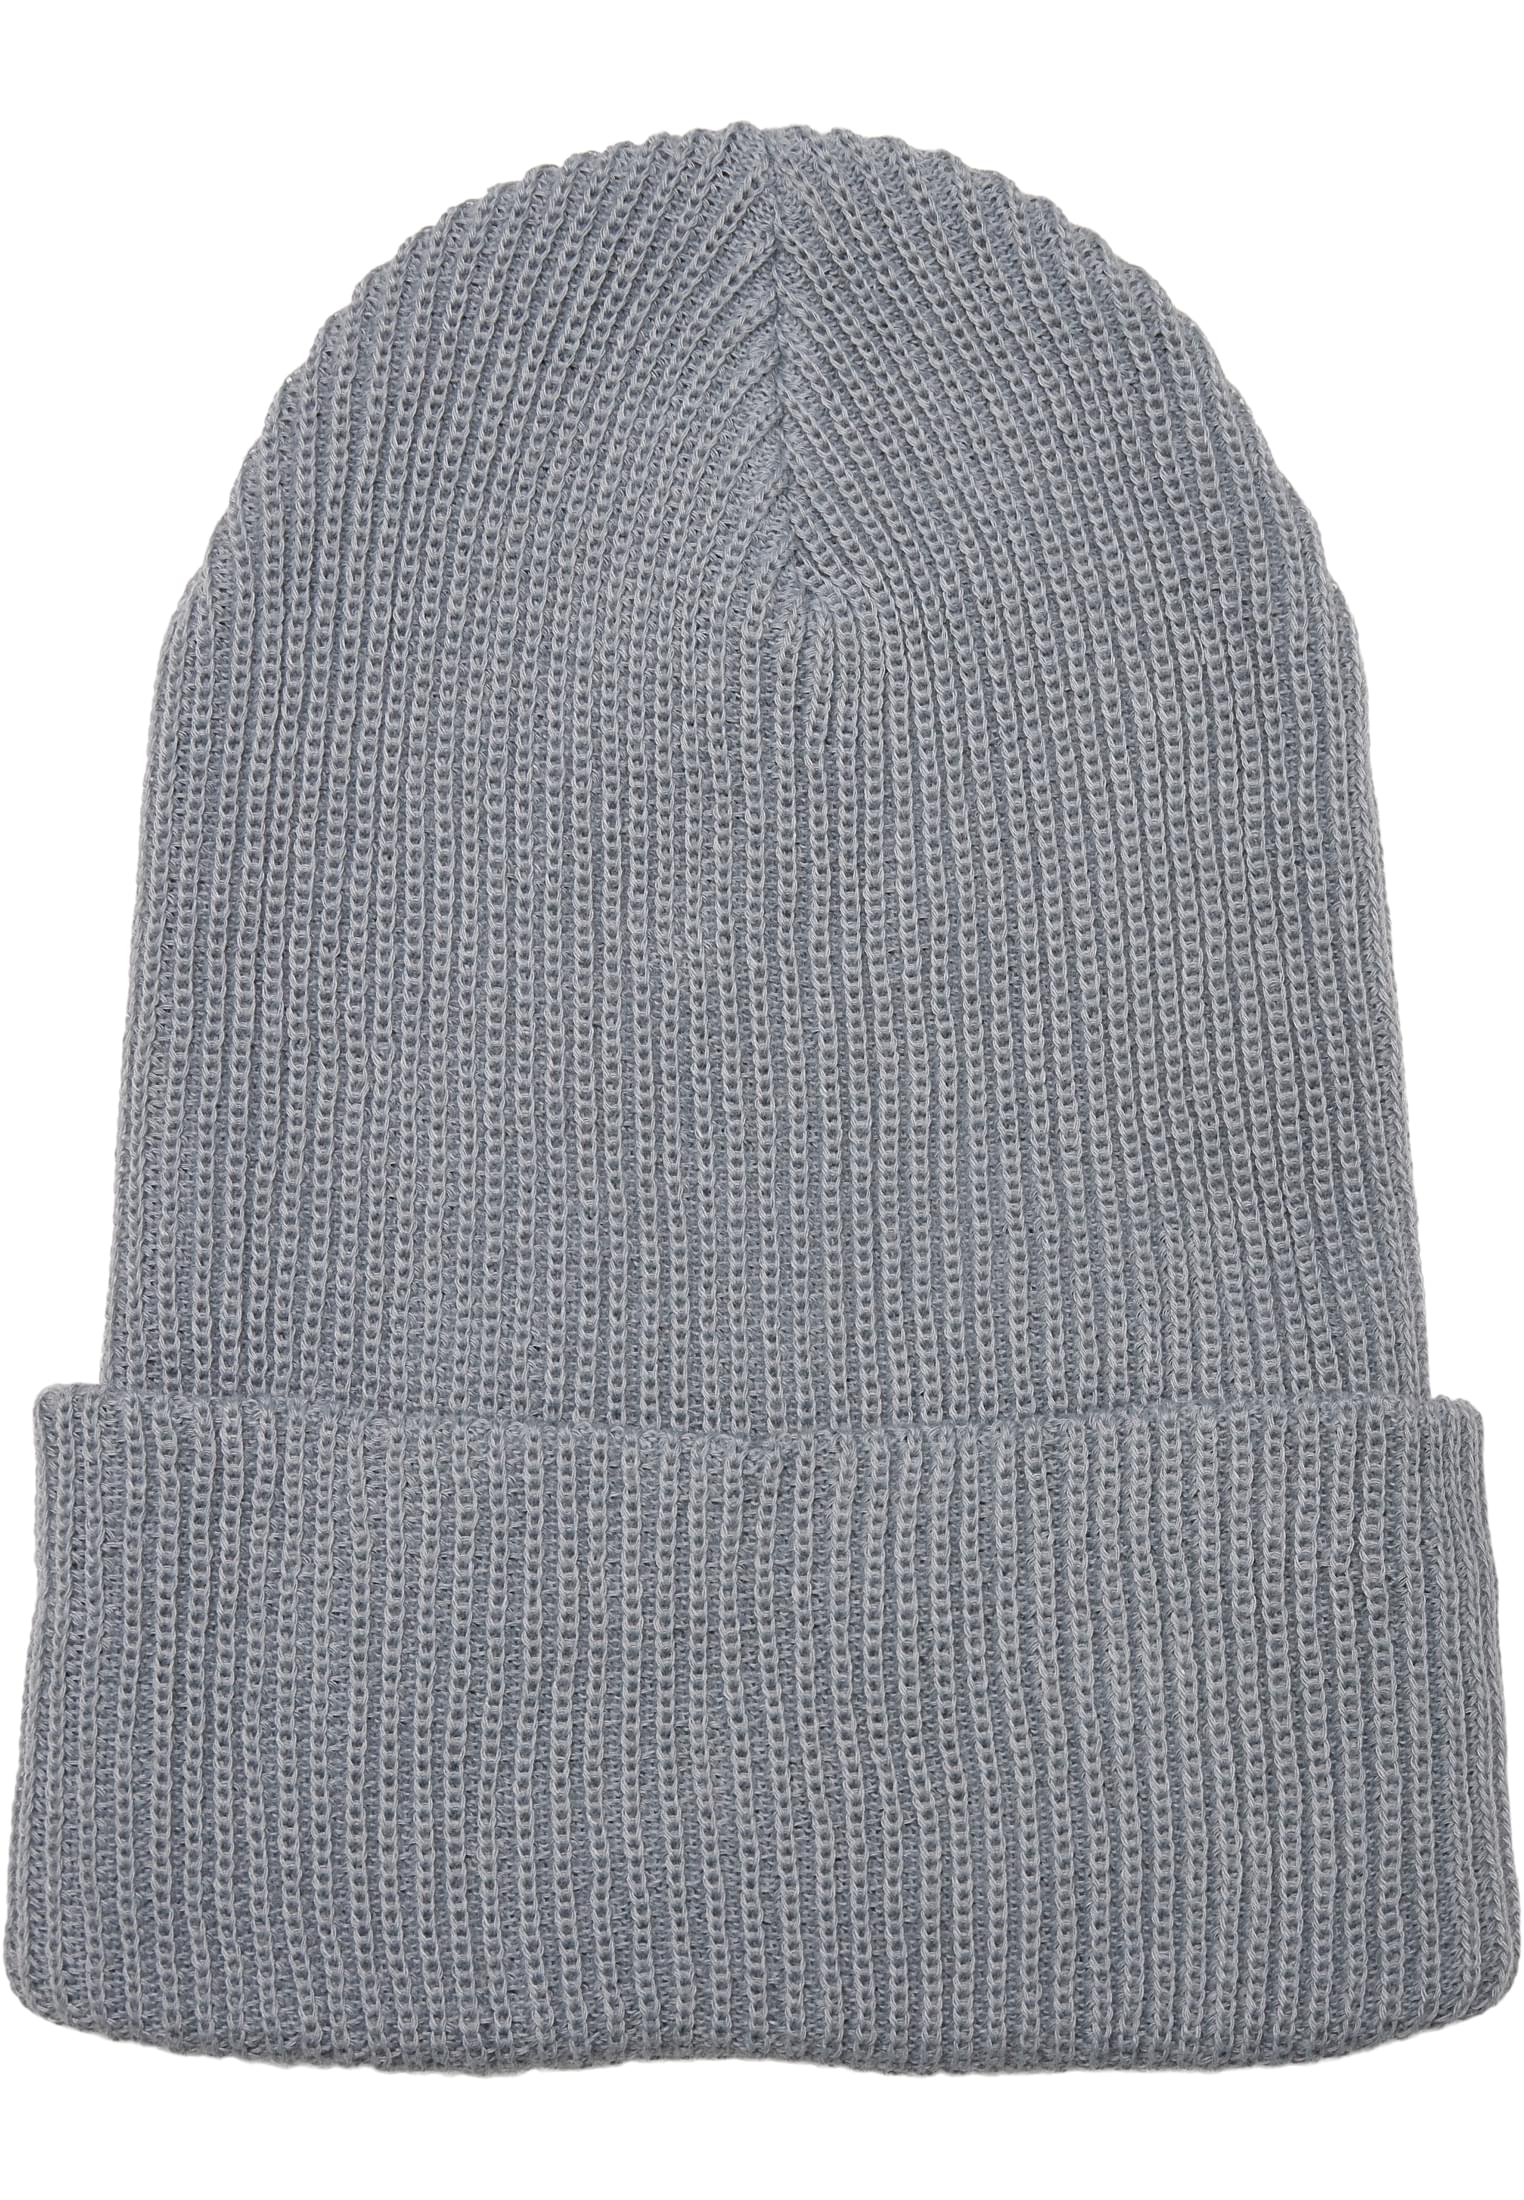 Ribbed knit cap made of recycled yarn grey